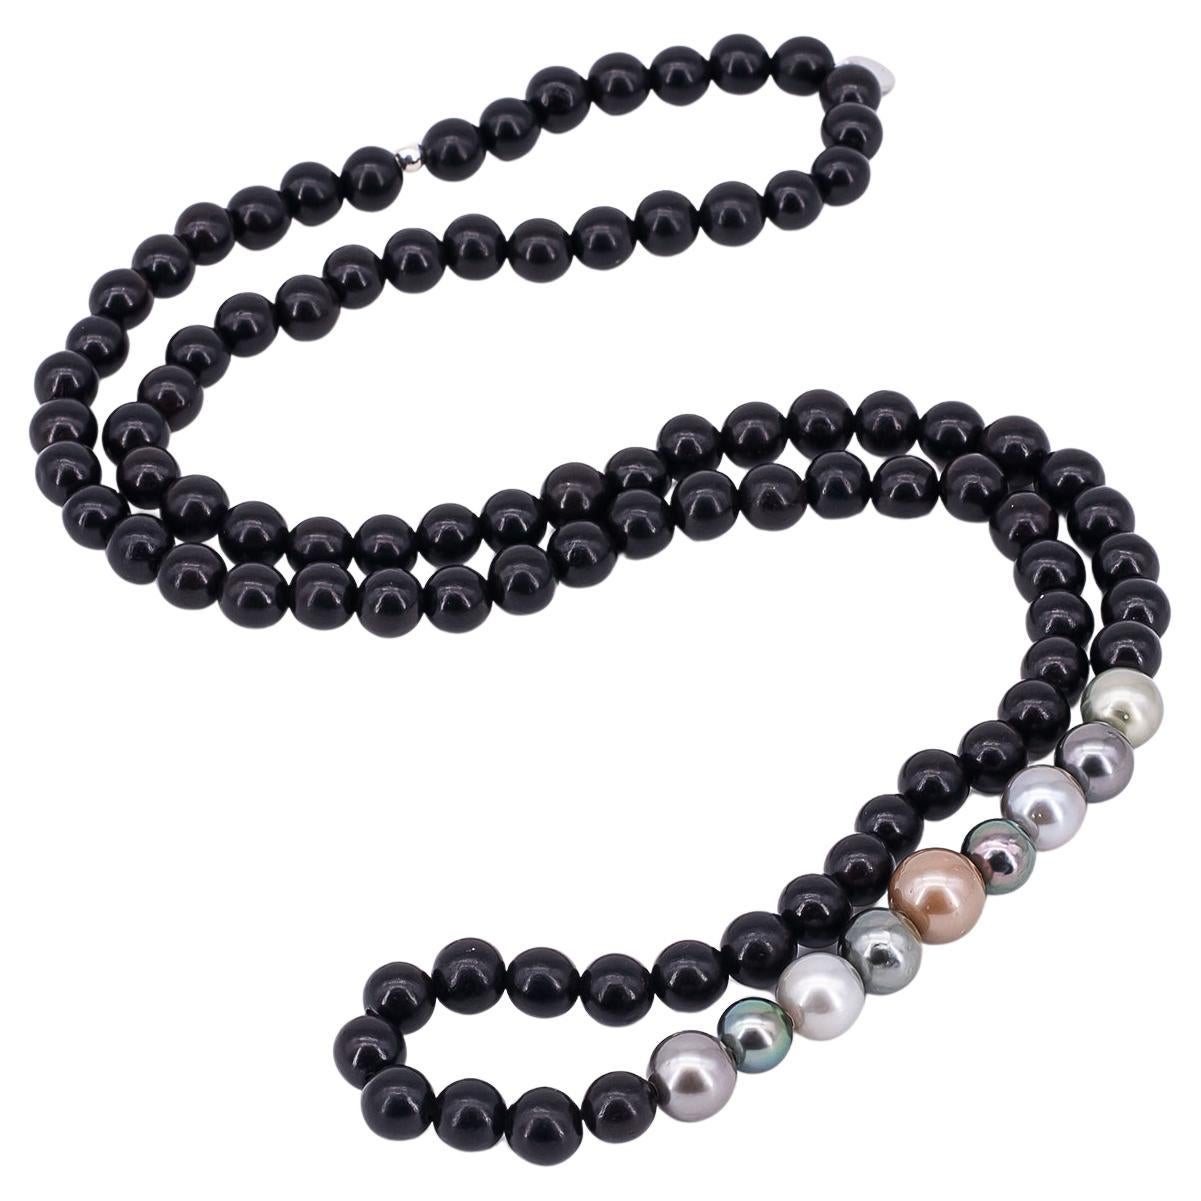 Prayer bracelet/necklace with ebony beads and Tahiti pearls